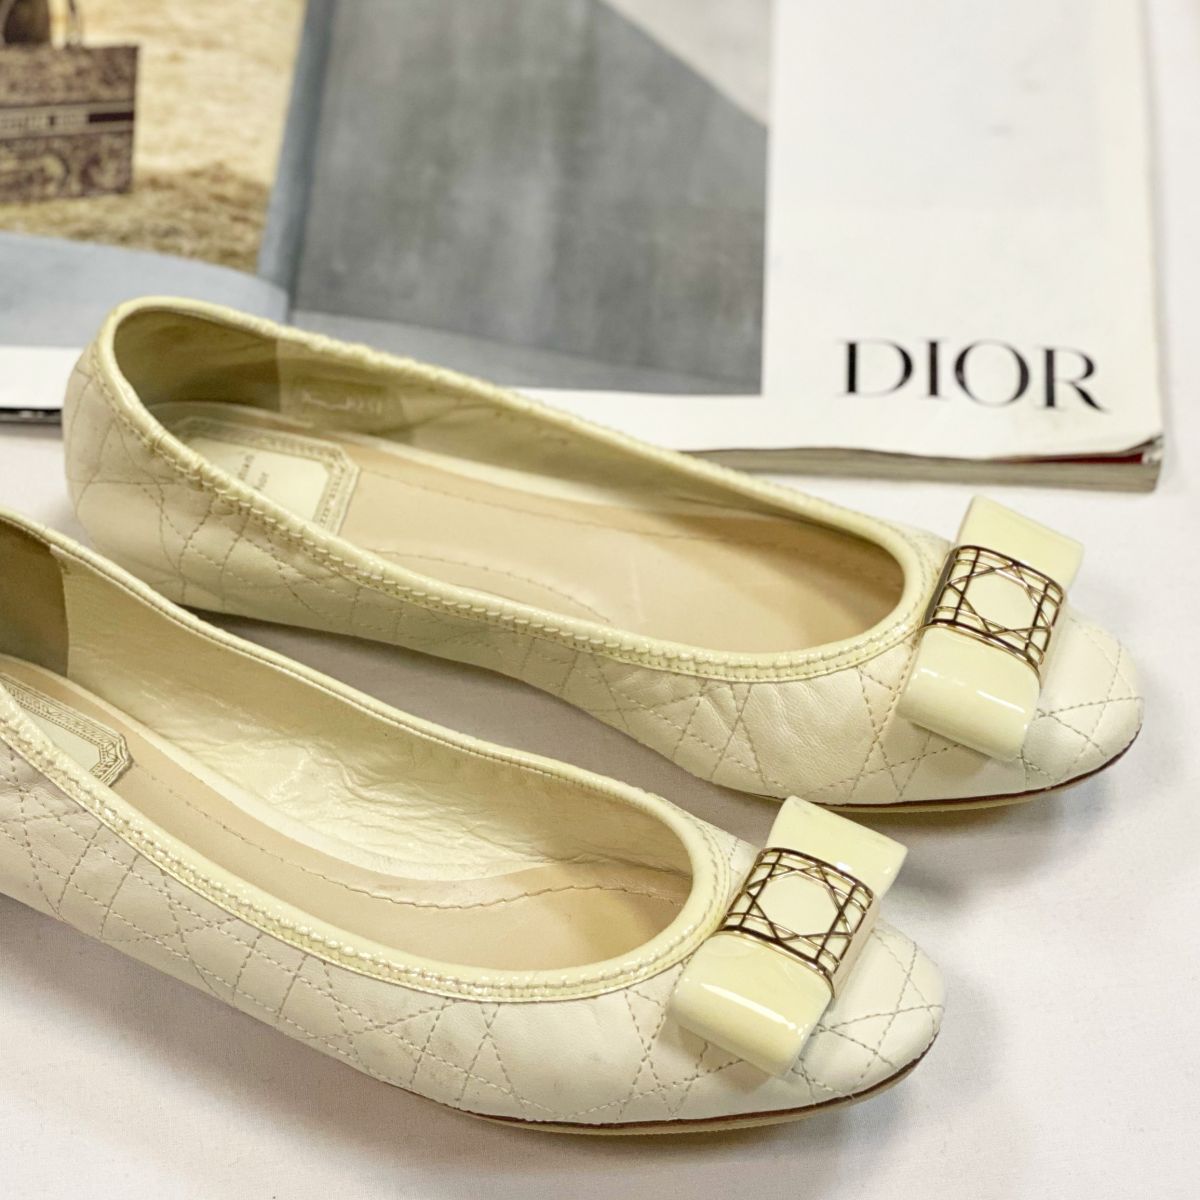 Балетки Christian Dior размер 36.5 цена 7 693 руб 